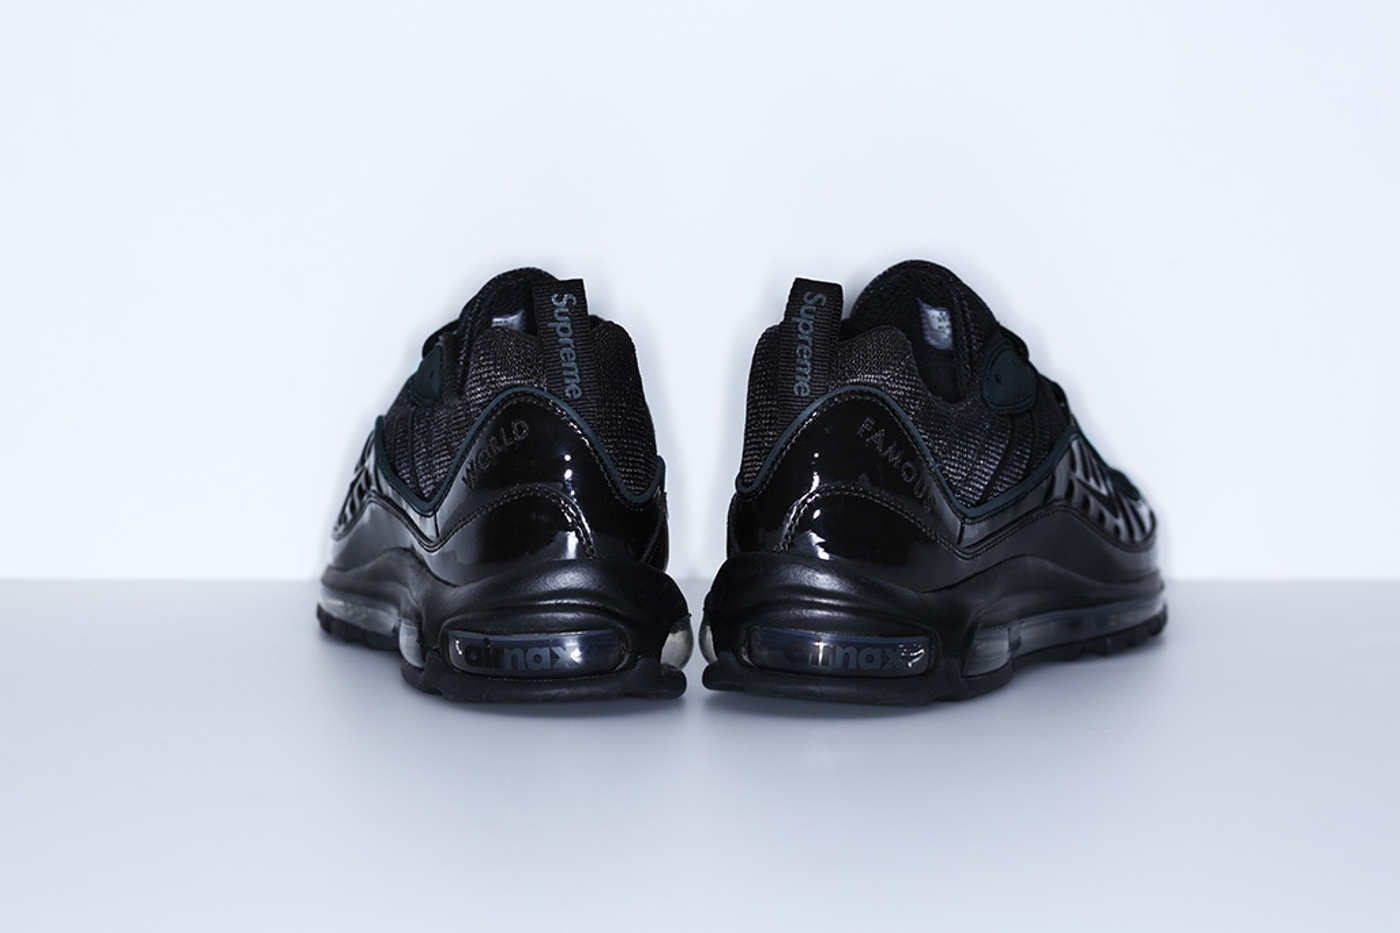 Black Patent Leather Air Max 98 (14/15)